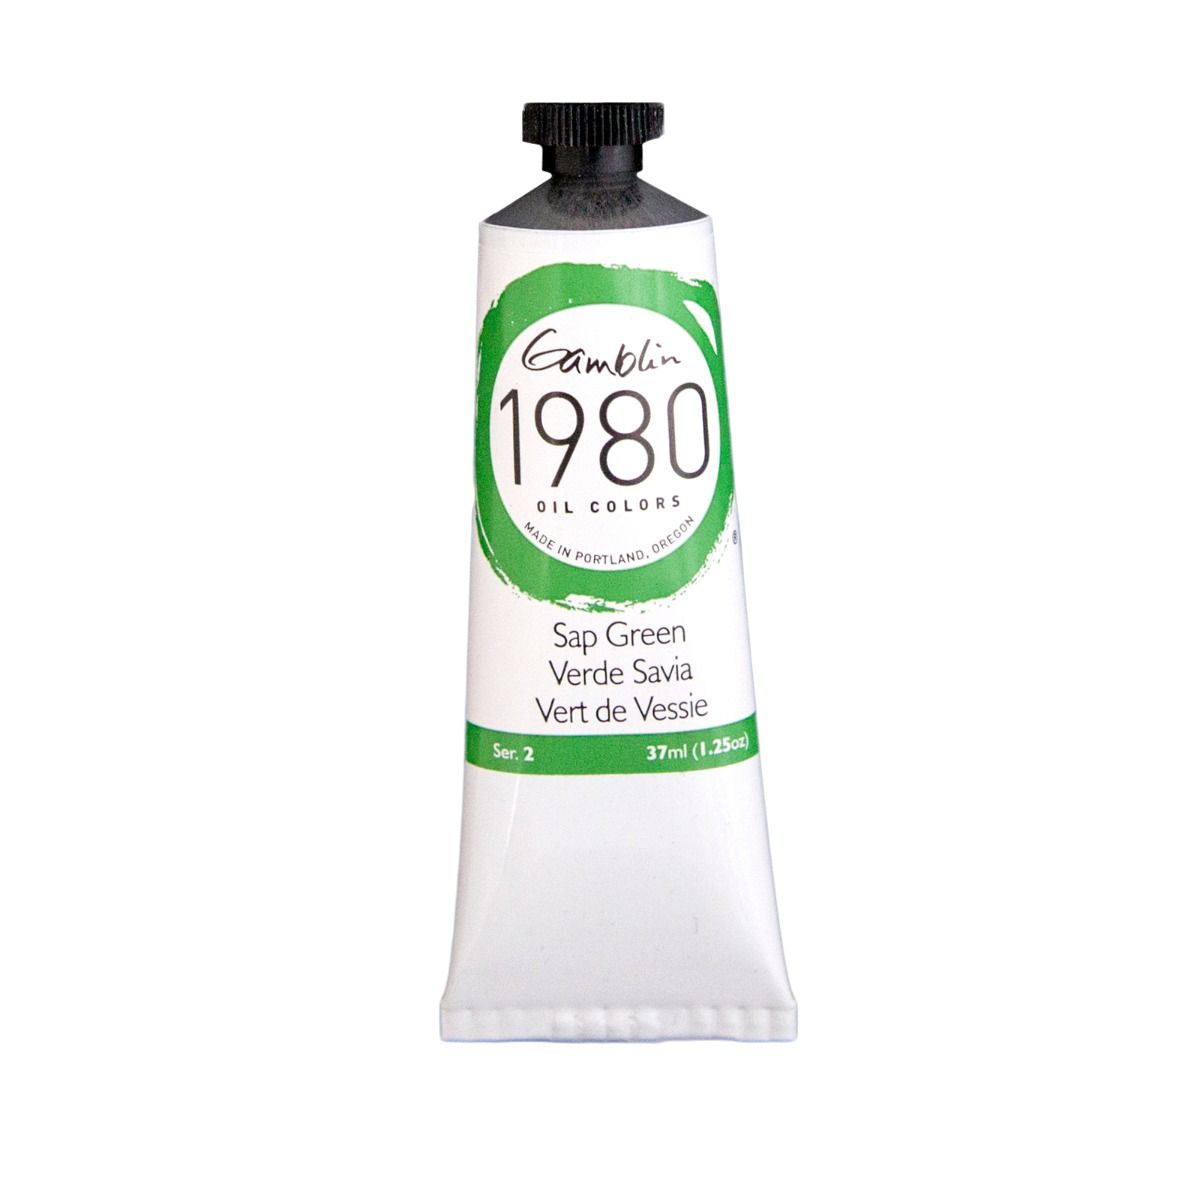 Gamblin 1980 Oils - Sap Green, 37 ml (1.25oz)